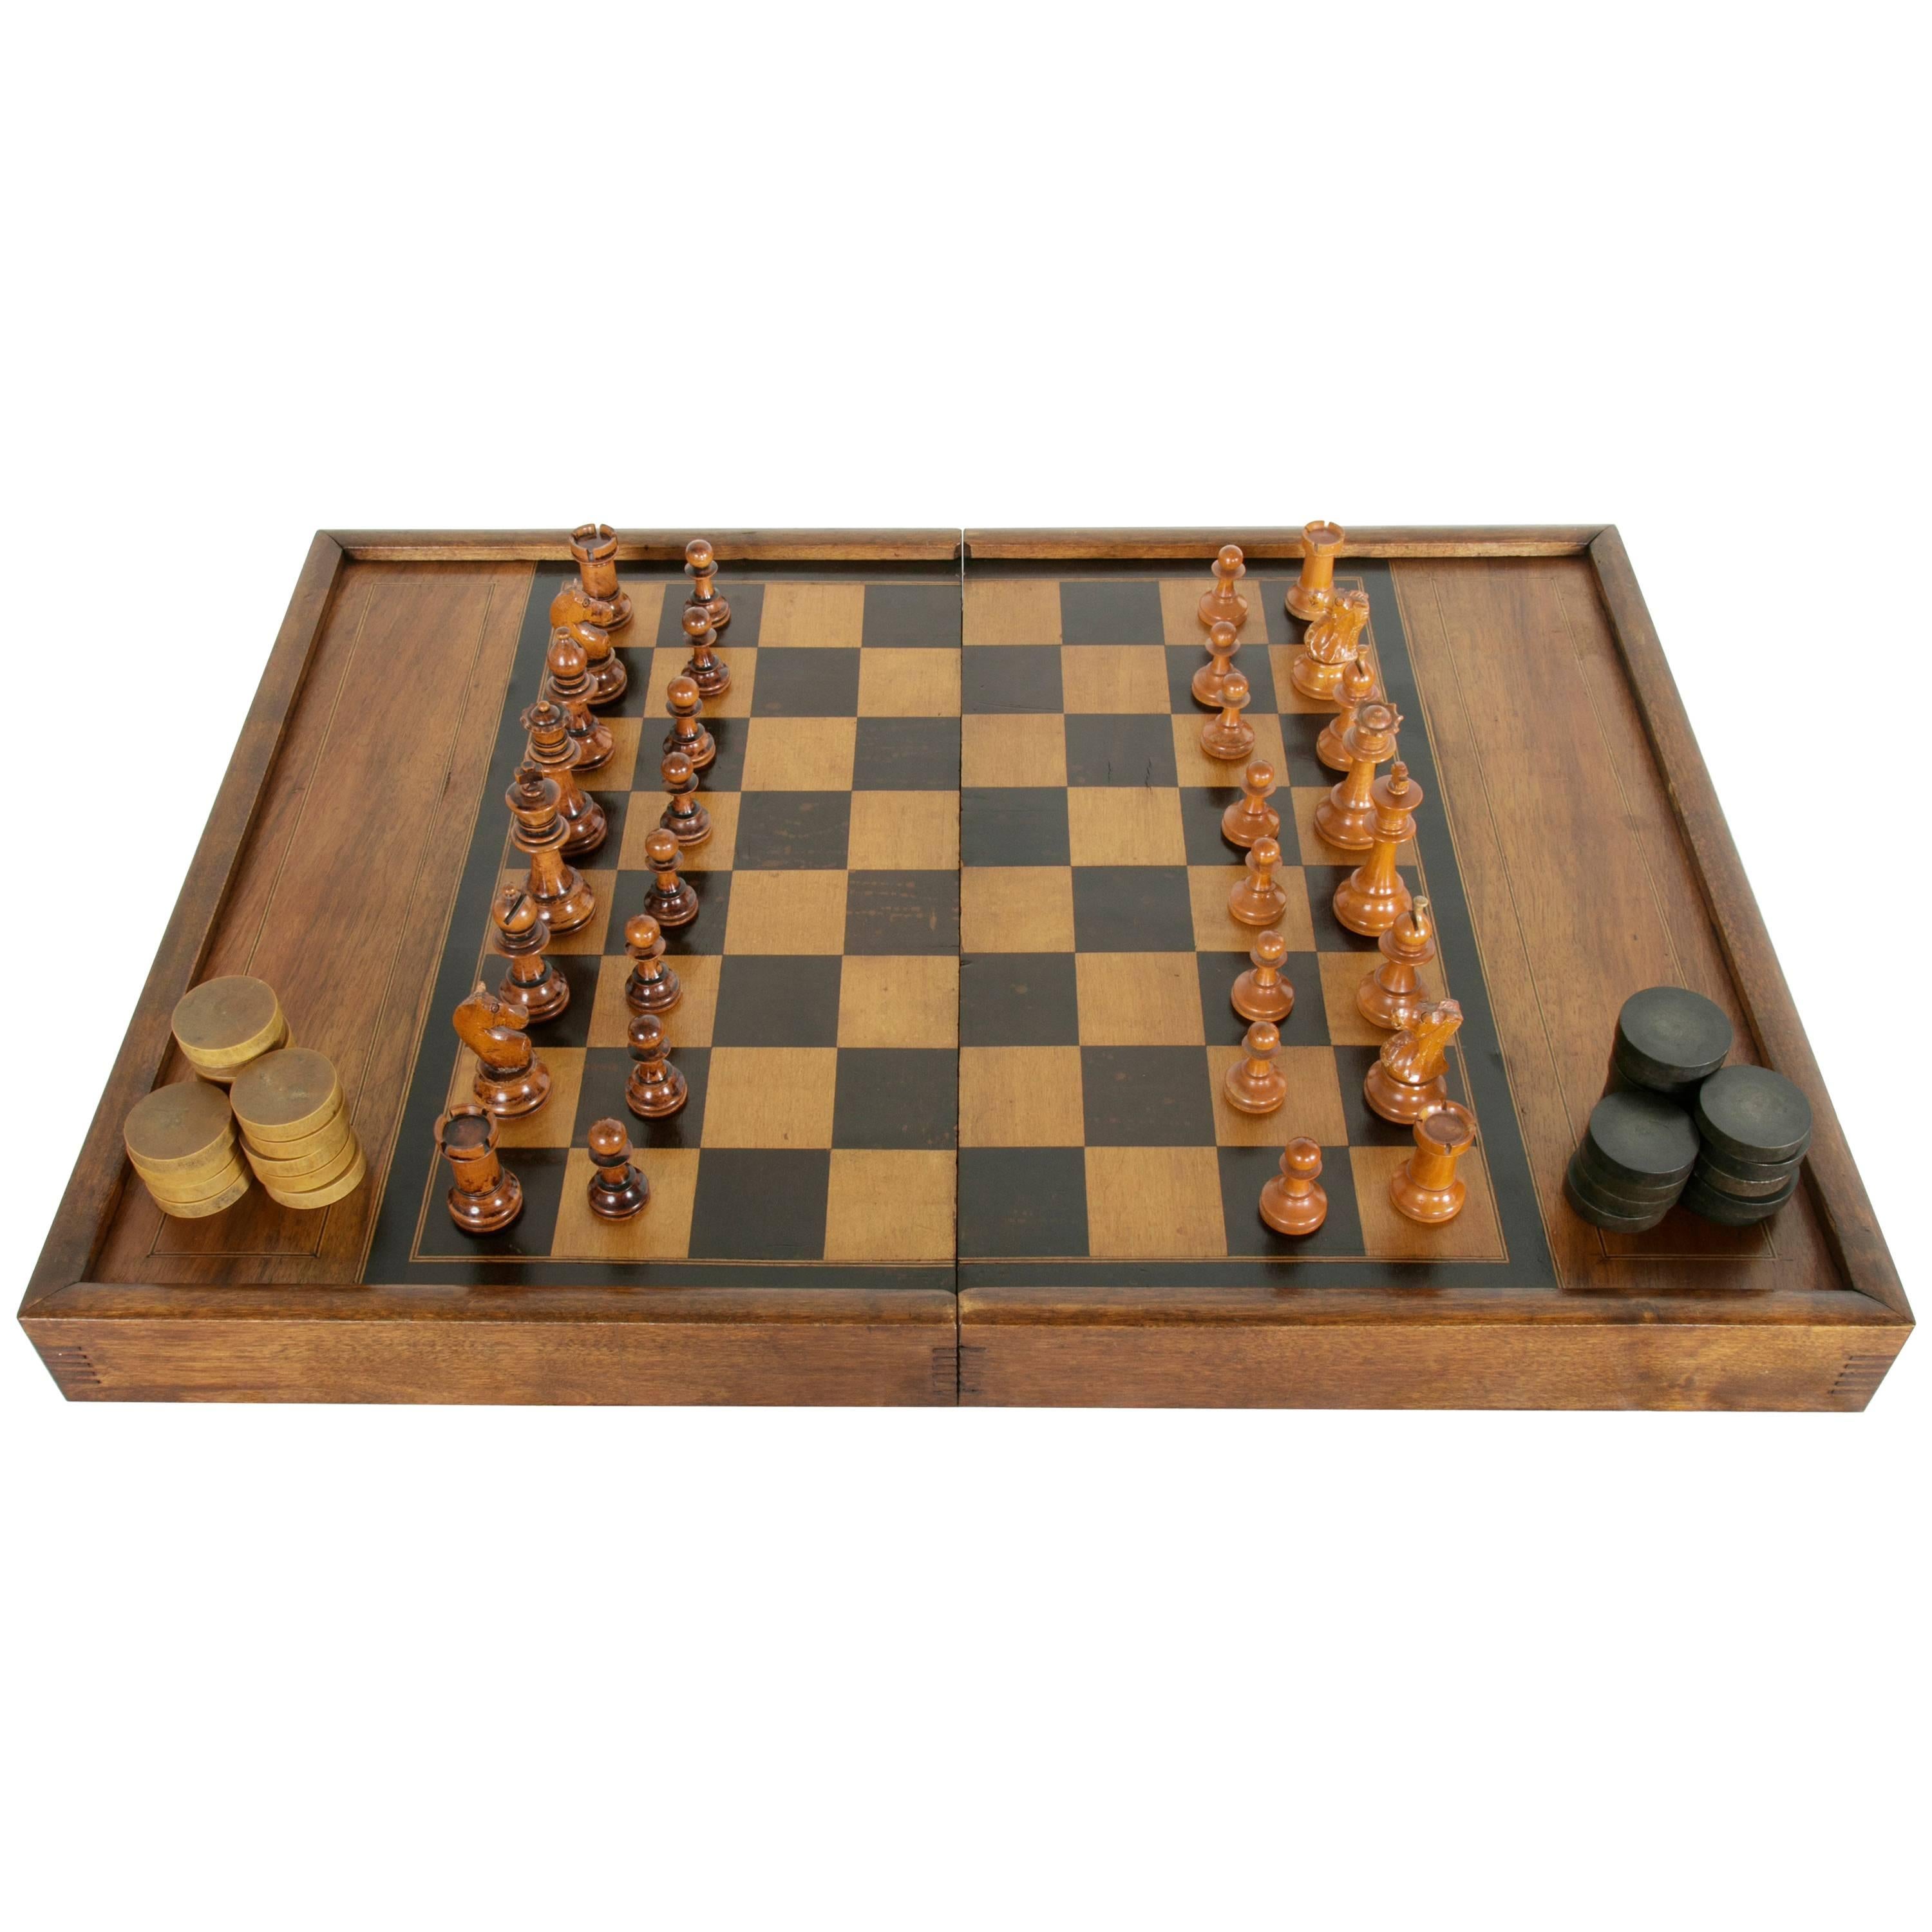 Artisan-Made Parquetry Game Box or Board, Chess Checkers Backgammon, circa 1900